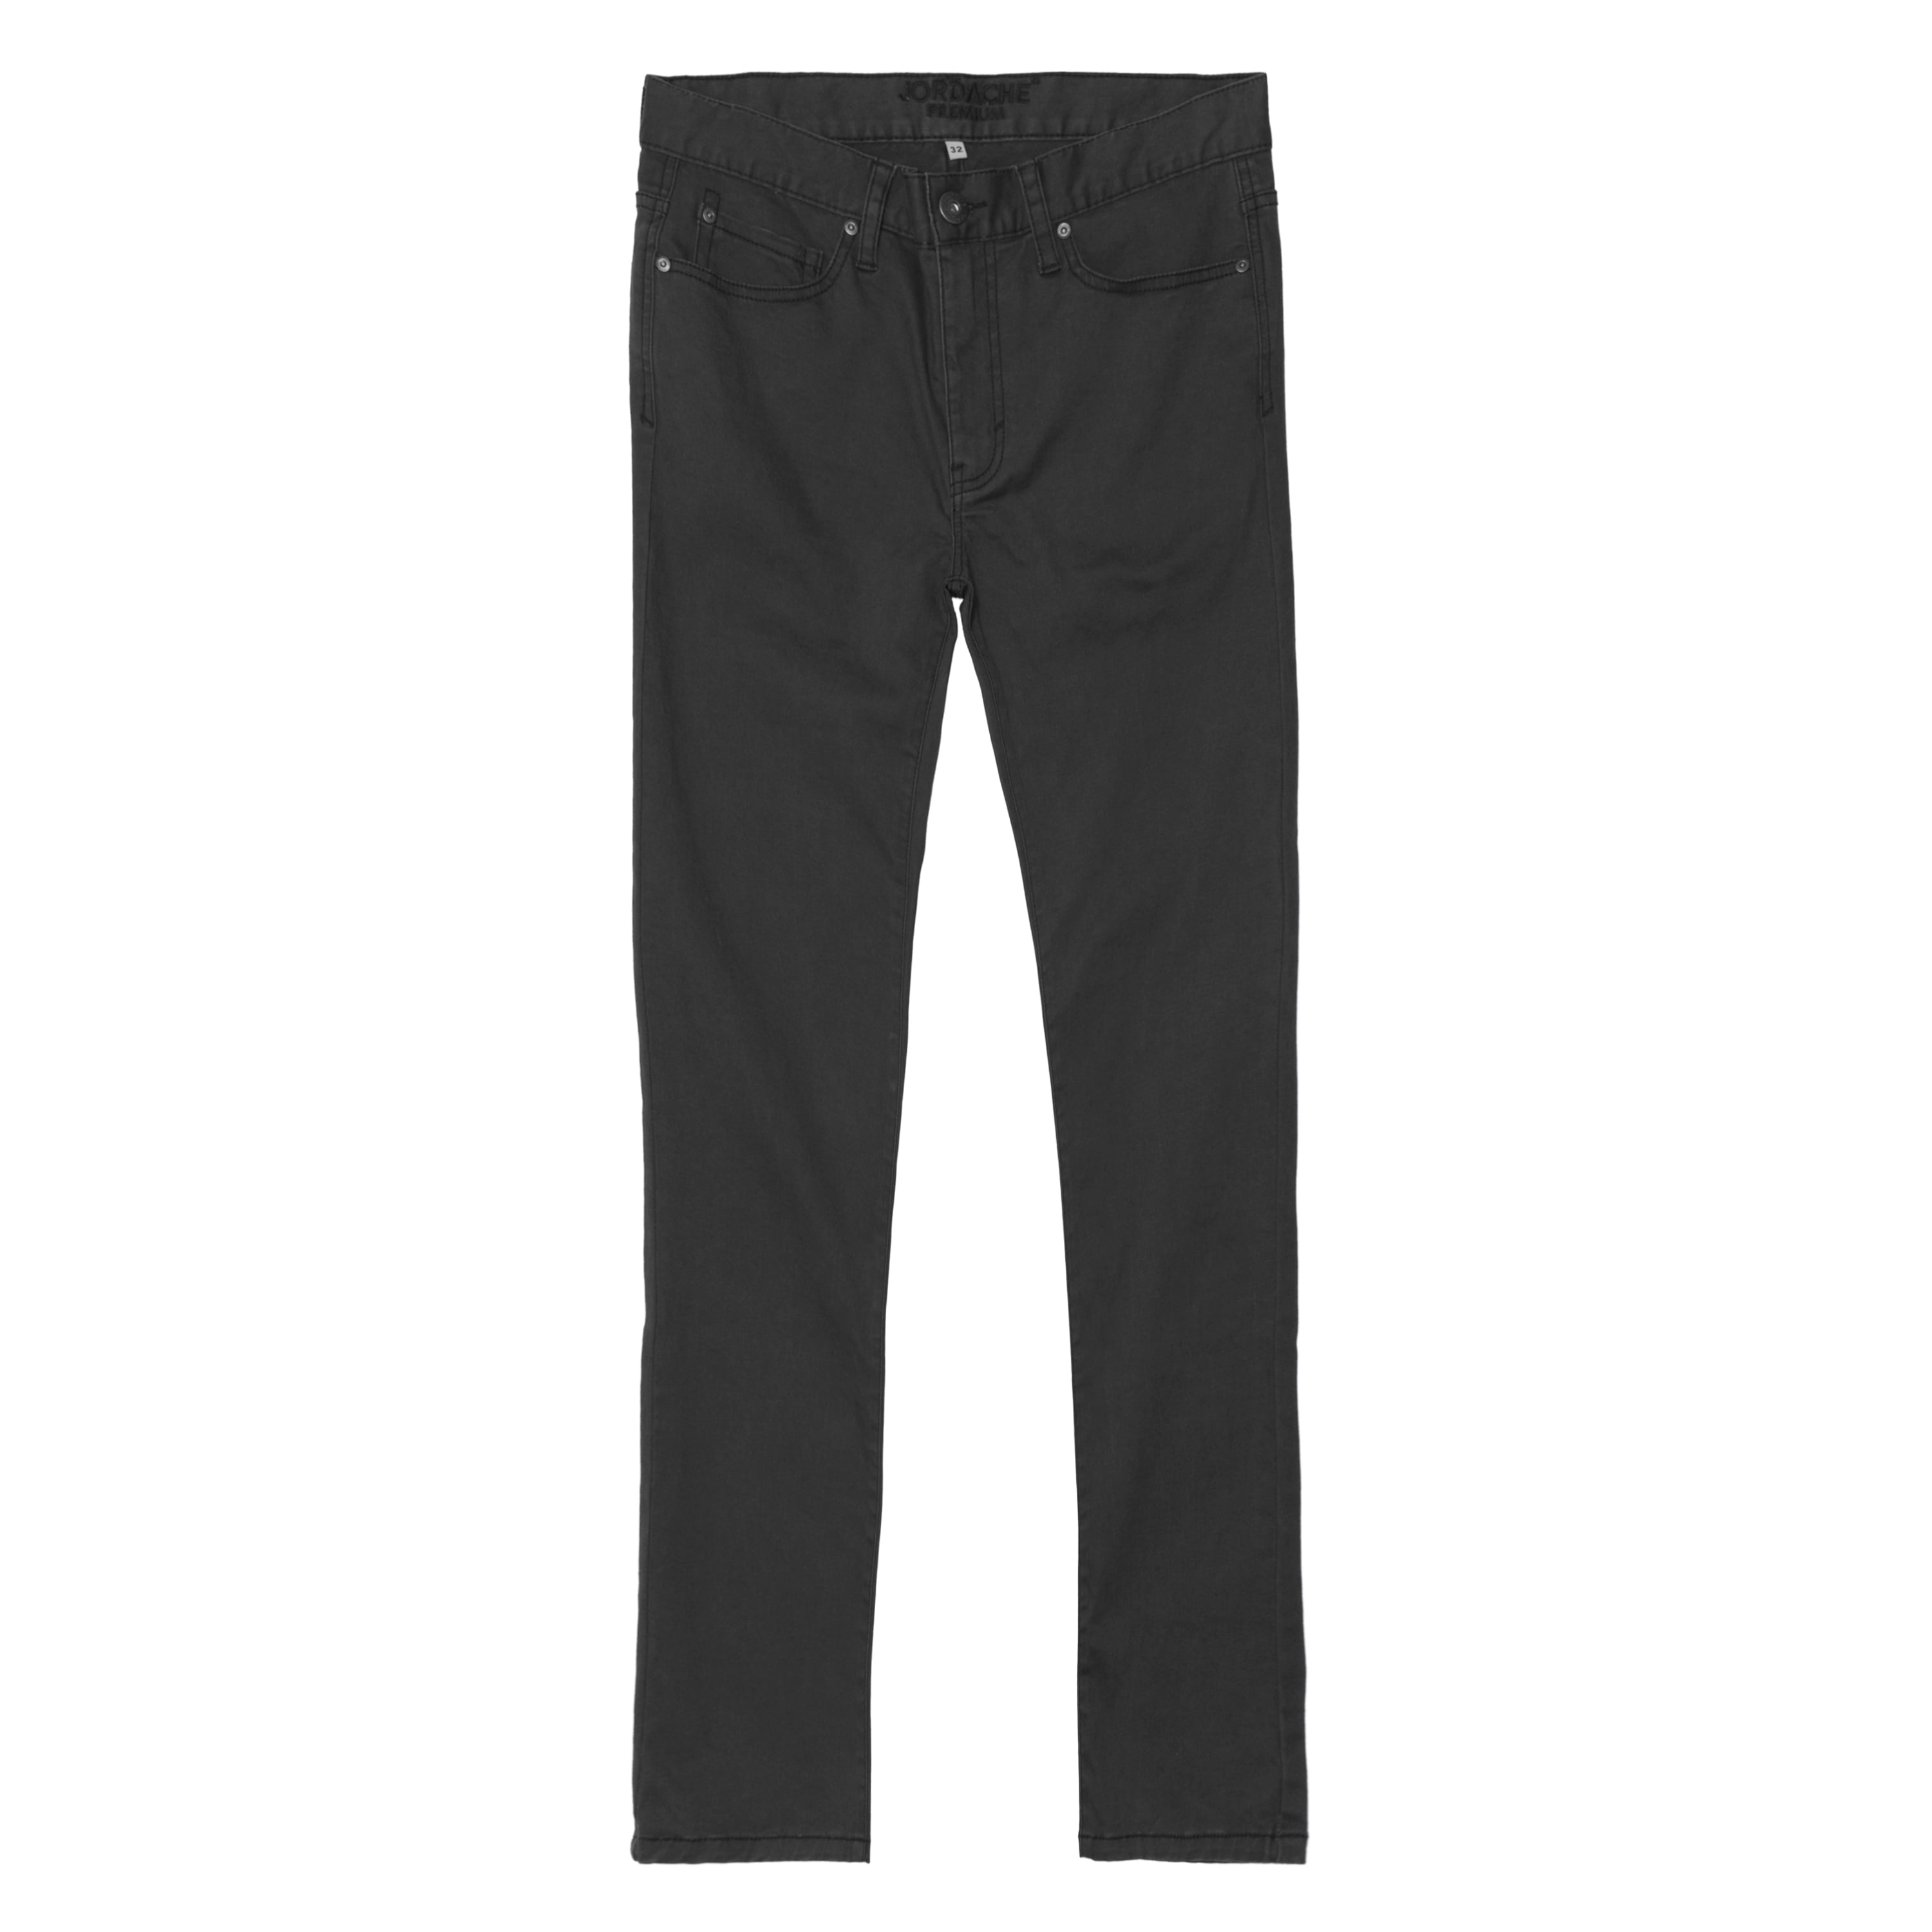 Jordache - Jordache Men's Skinny Fit Twill Pants - Walmart.com ...